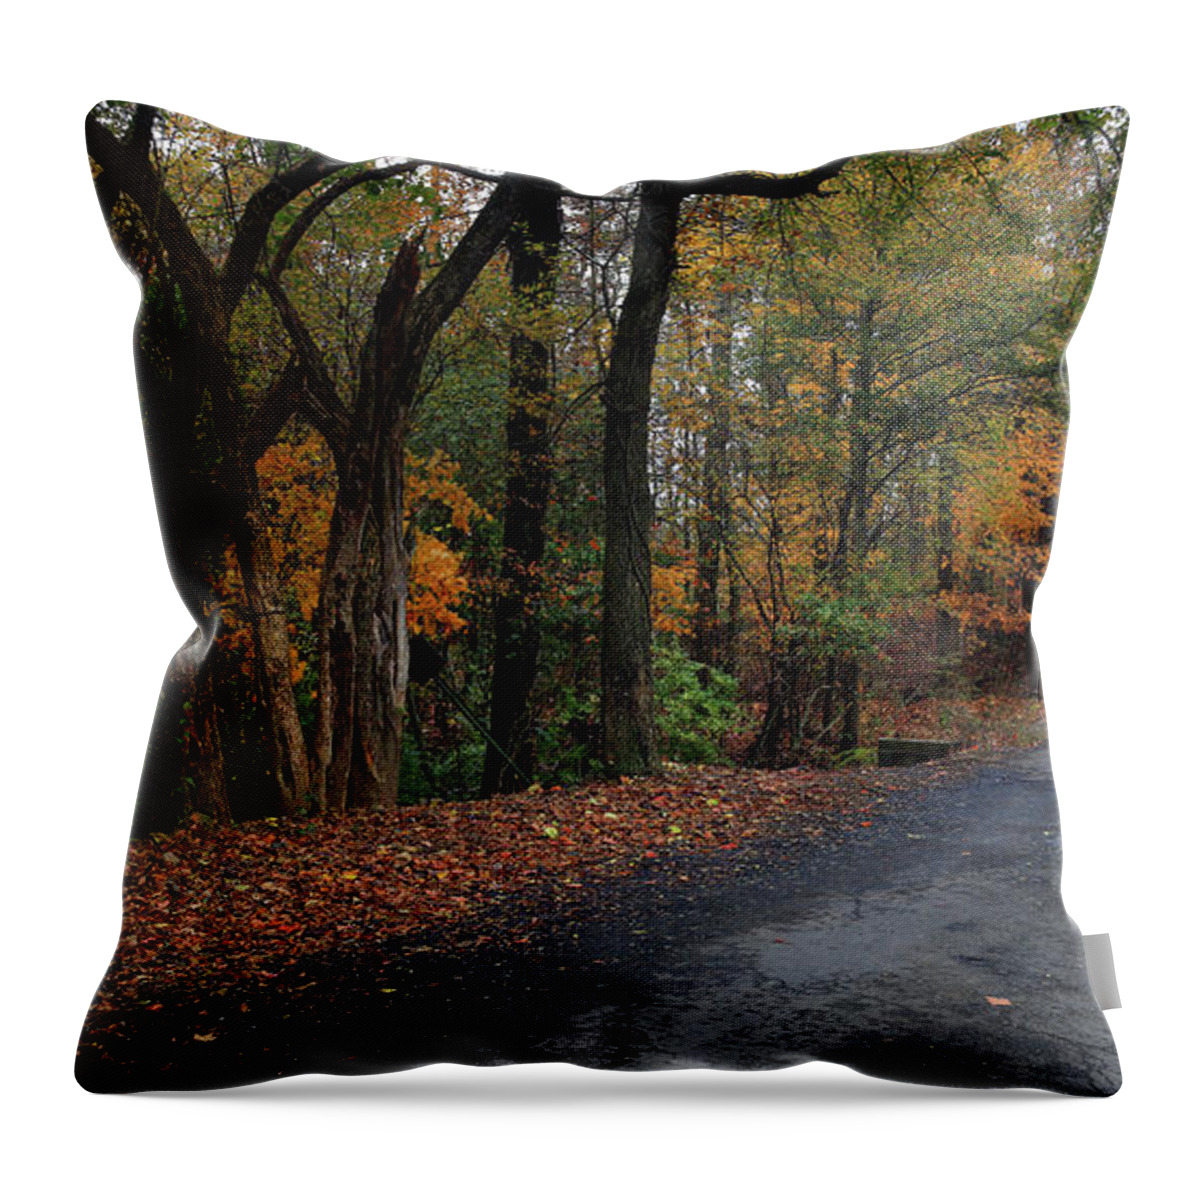  Throw Pillow featuring the photograph Fall bridge ouachita by William Rainey